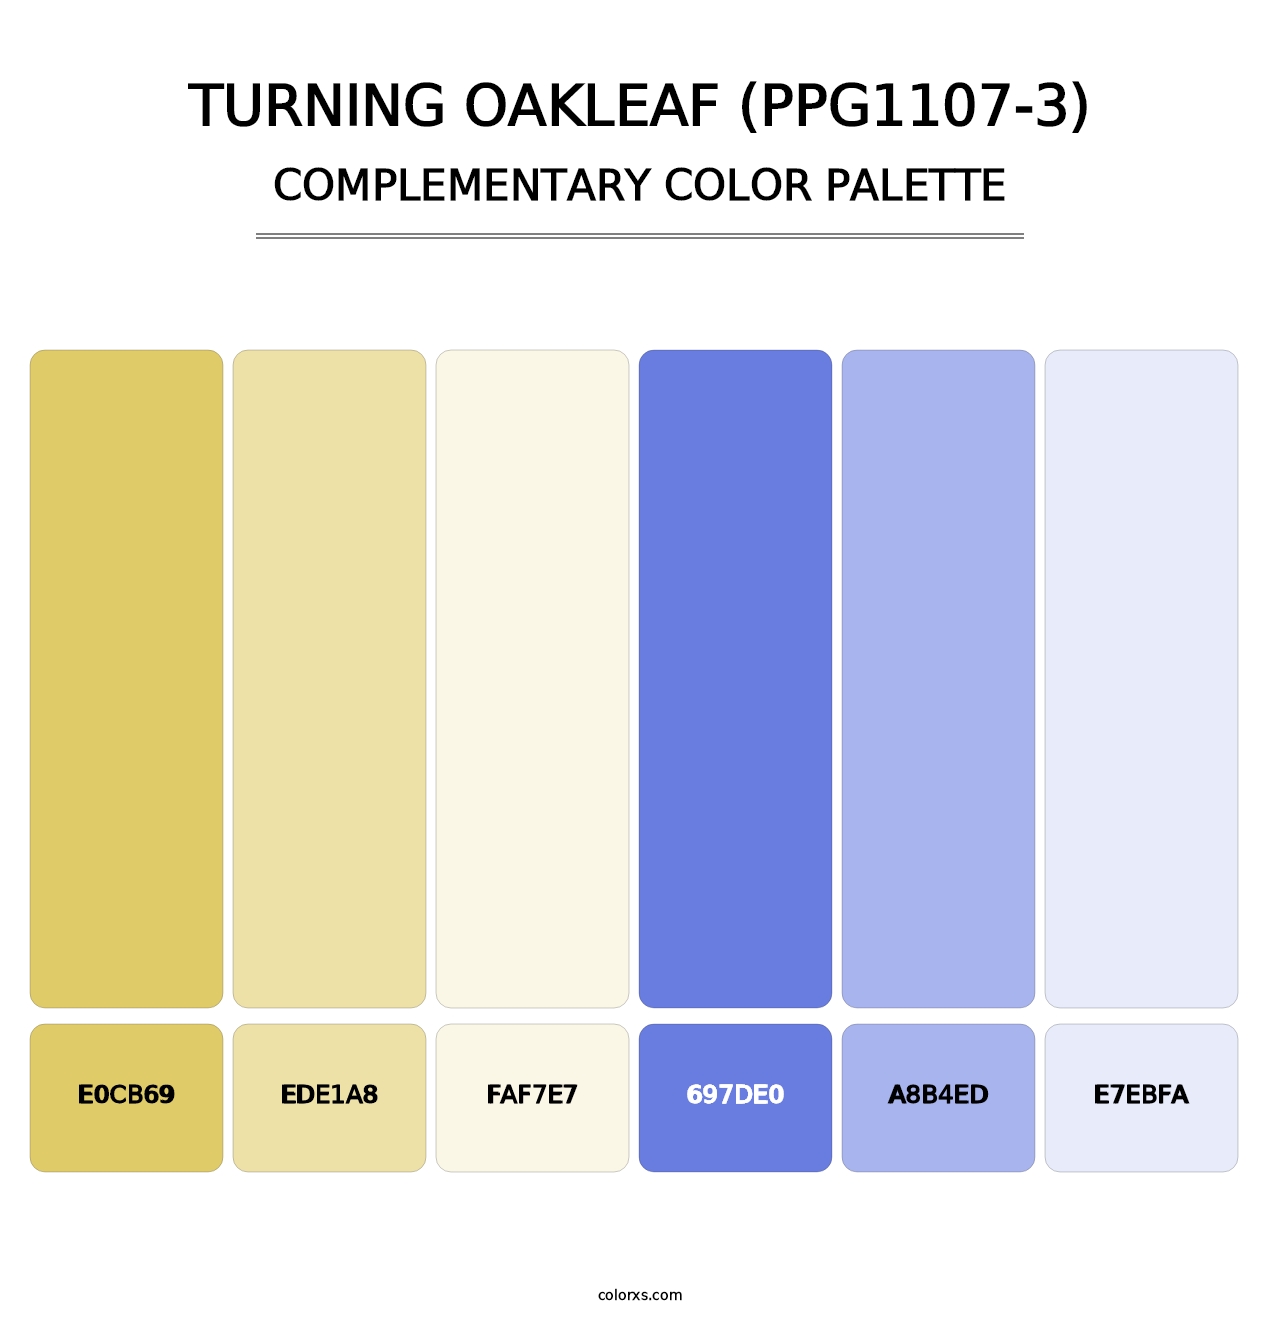 Turning Oakleaf (PPG1107-3) - Complementary Color Palette